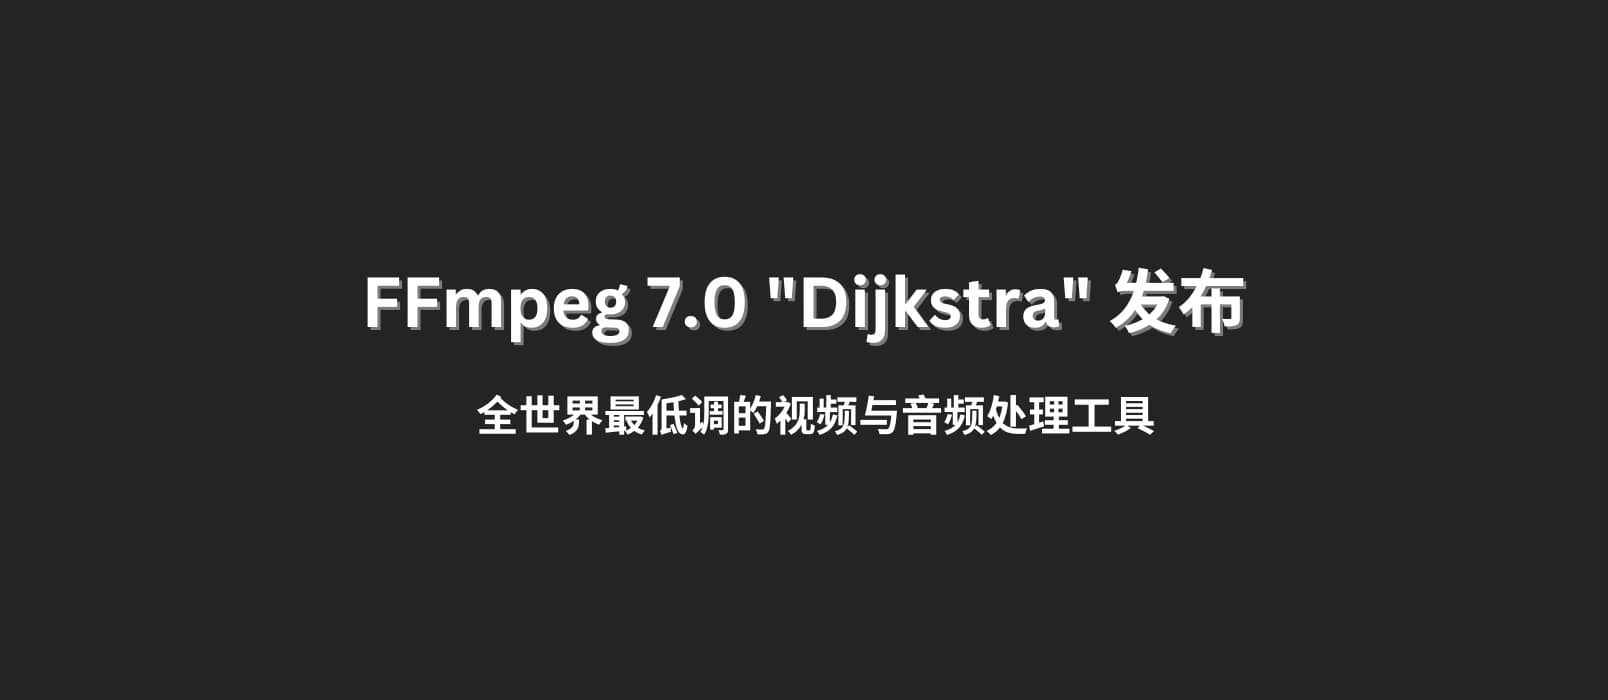 FFmpeg 7.0 "Dijkstra" 发布，全世界最低调的视频与音频处理工具